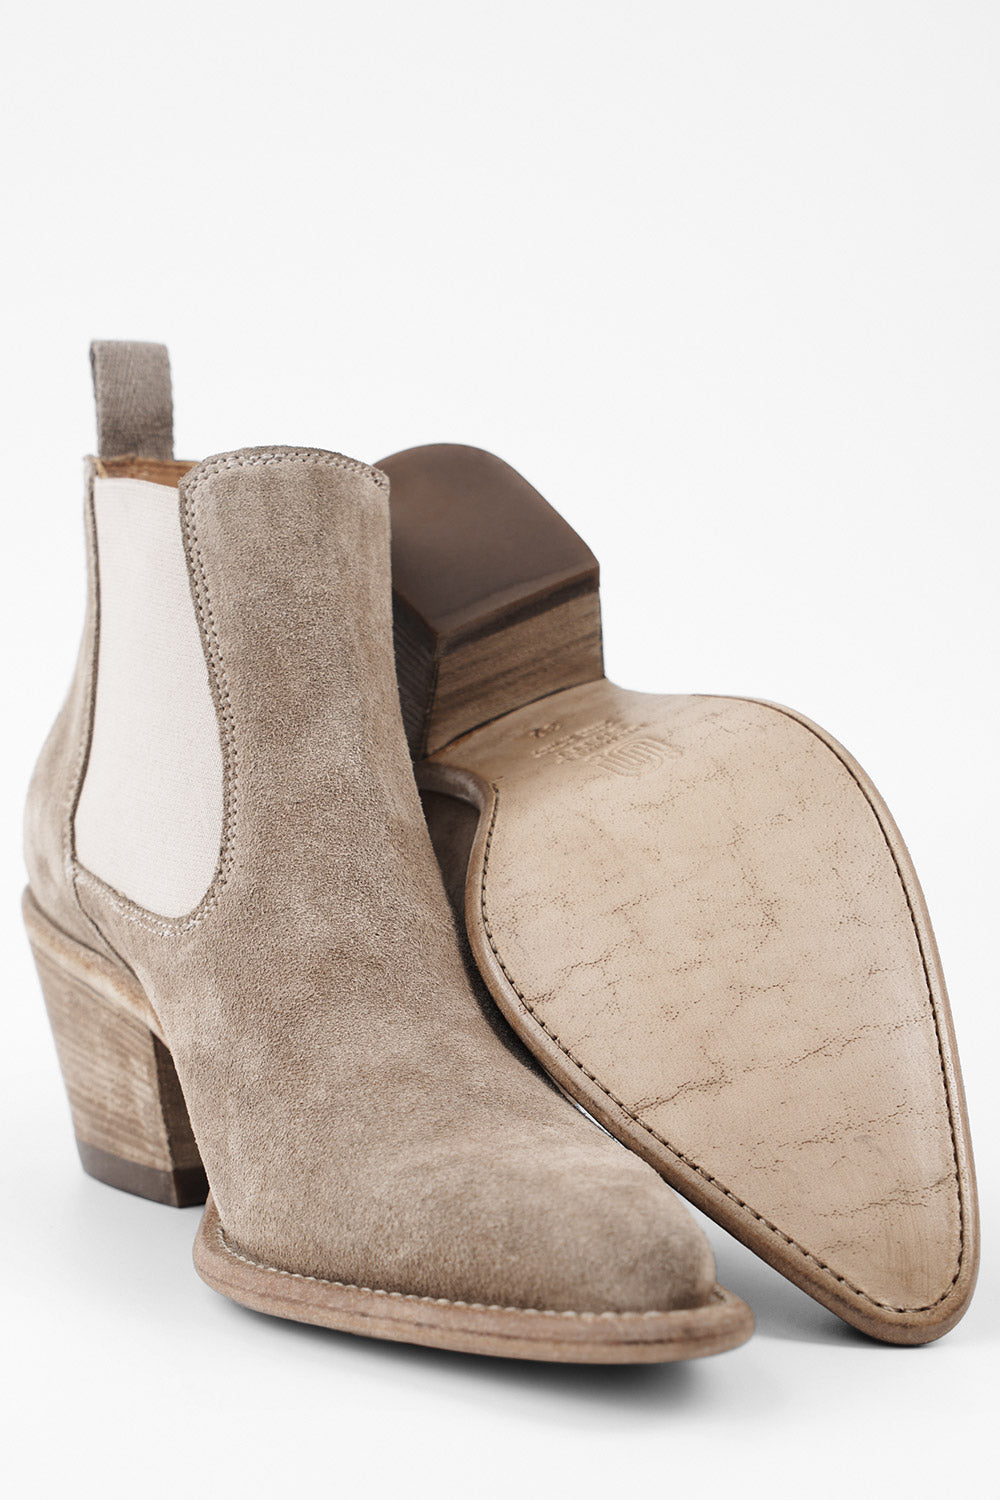 AUSTIN light-sand suede low chelsea texan boots.